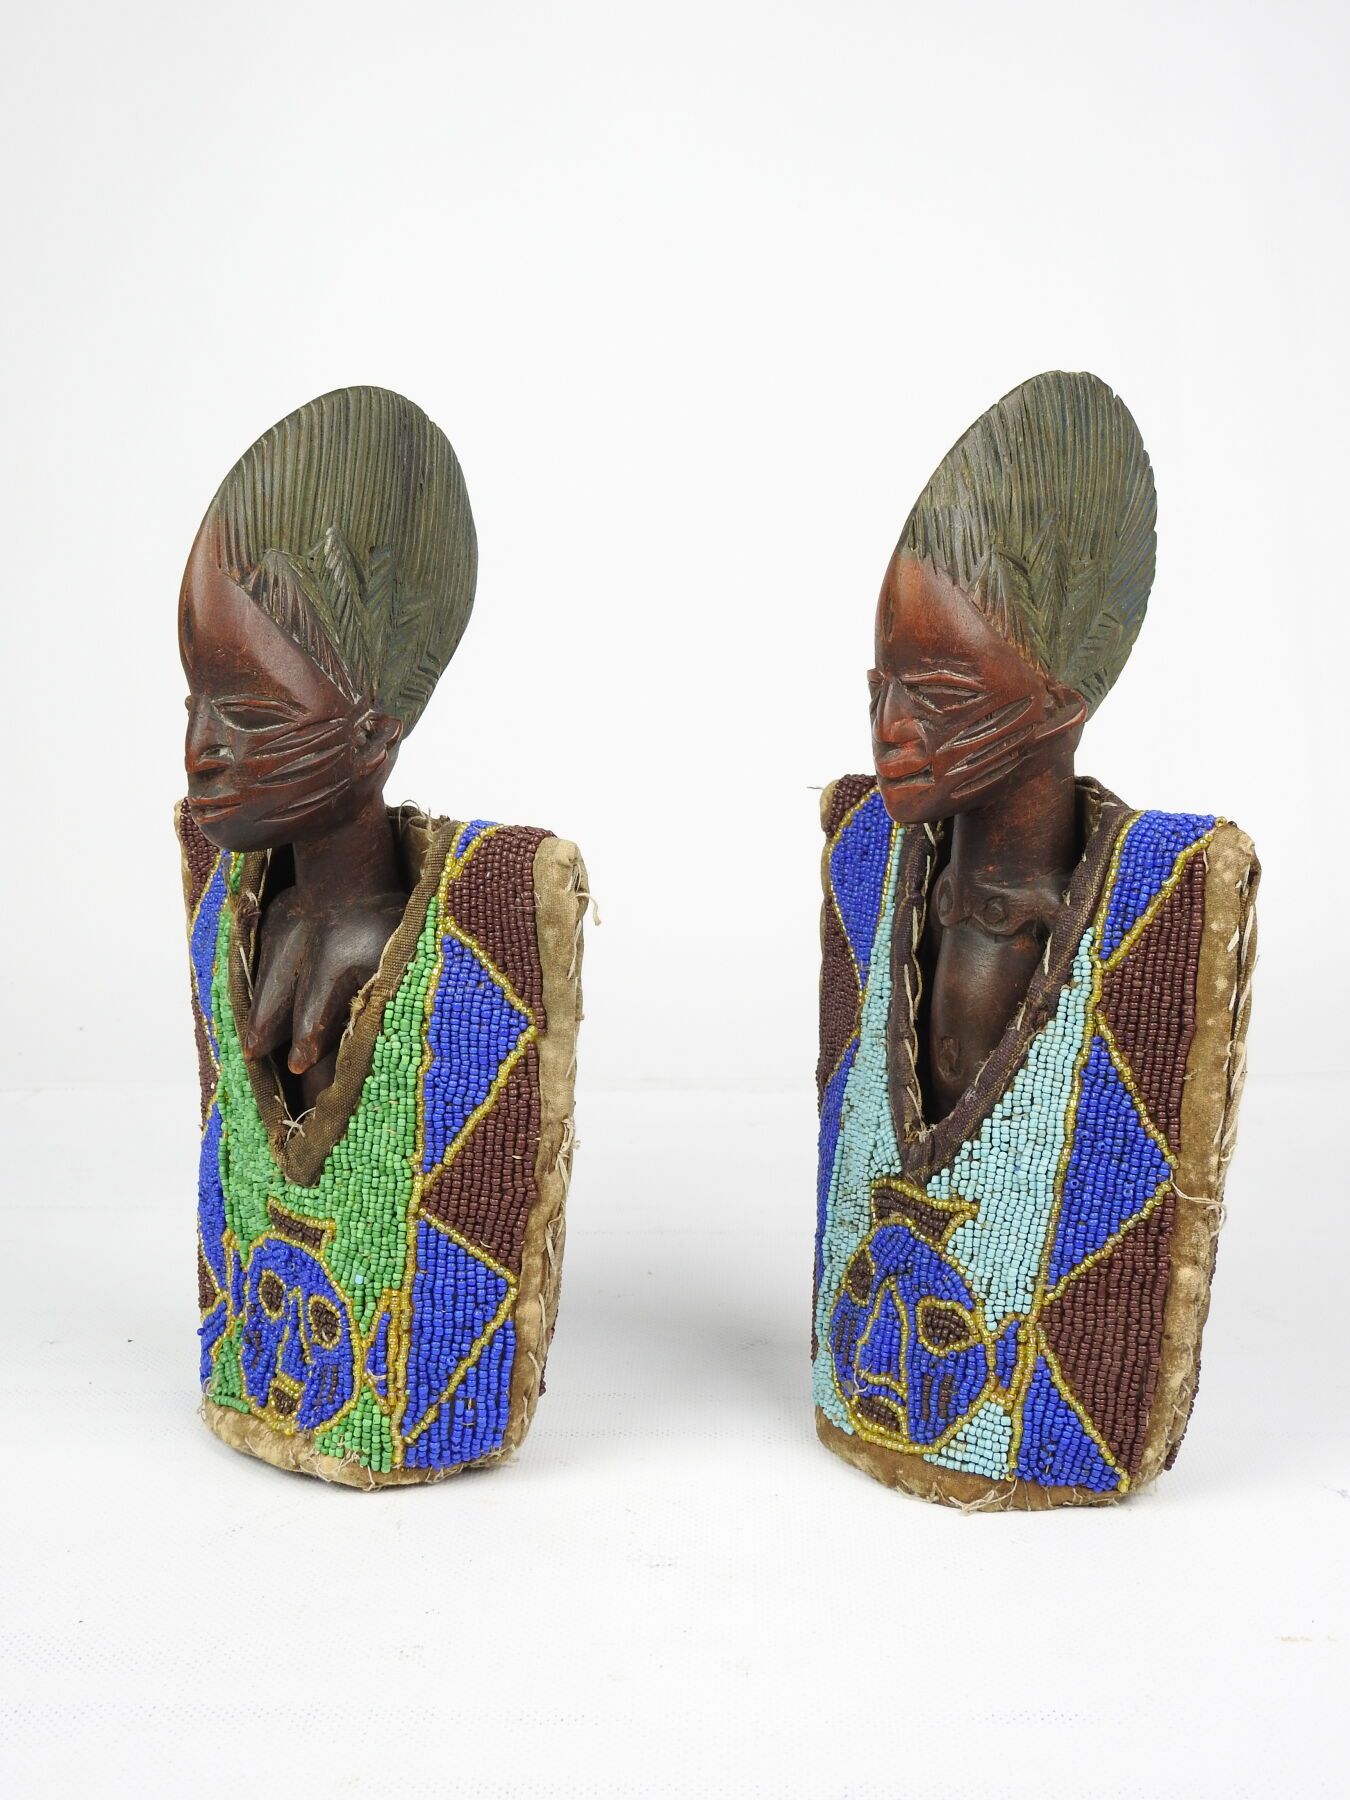 Null 尼日利亚，YOROUBA。
雕刻的木头，珠子，织物。
一对穿着珠子大衣的 "Ibedji "双胞胎人物。
高度：28厘米。
出处：私人收藏，布卢瓦。